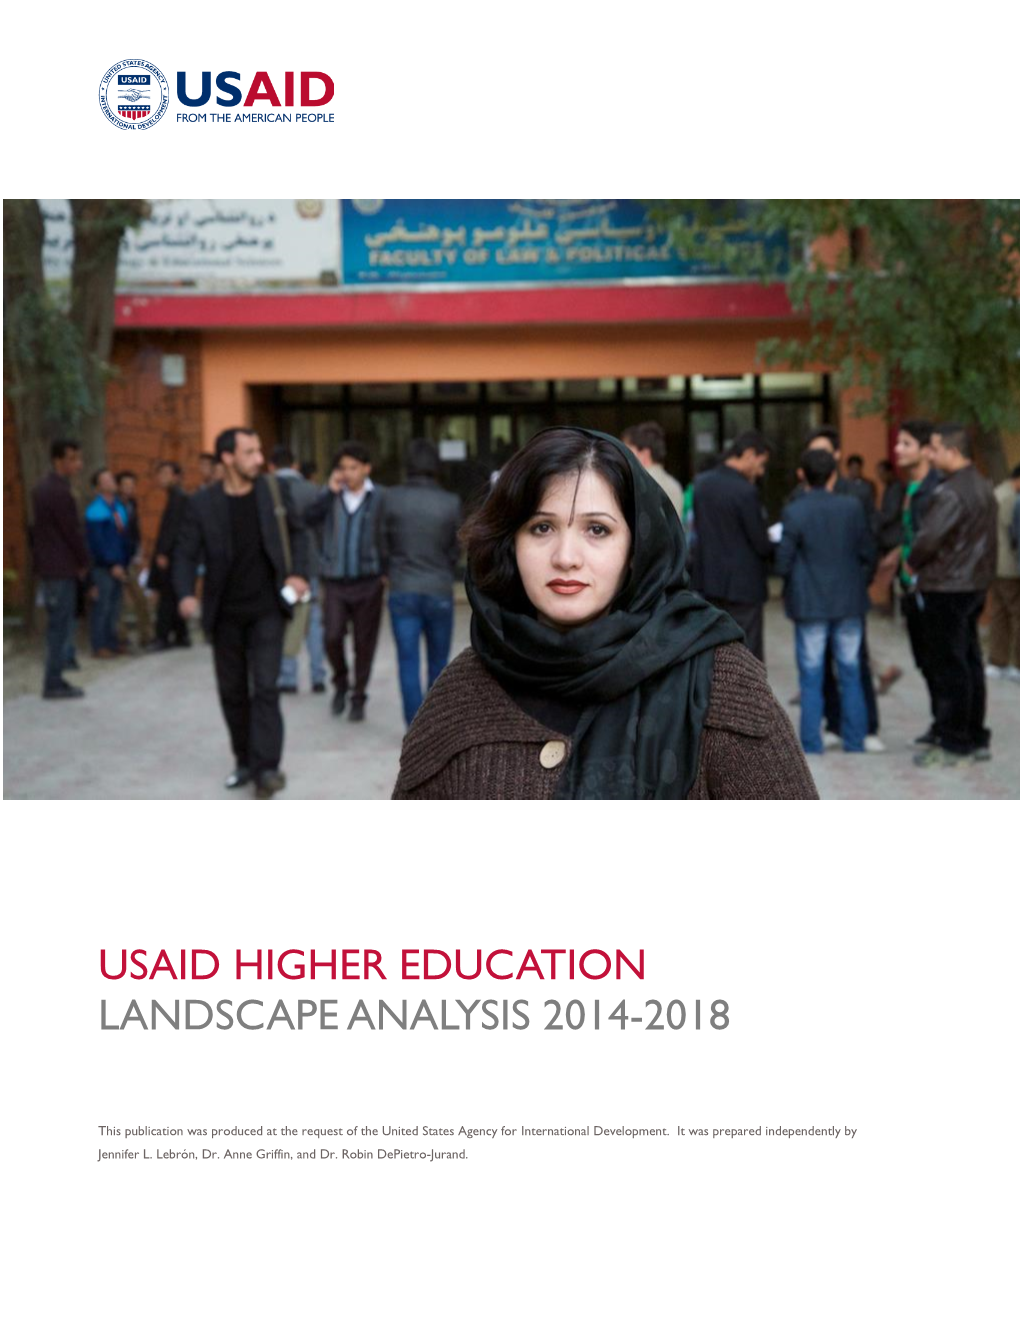 Usaid Higher Education Landscape Analysis 2014-2018